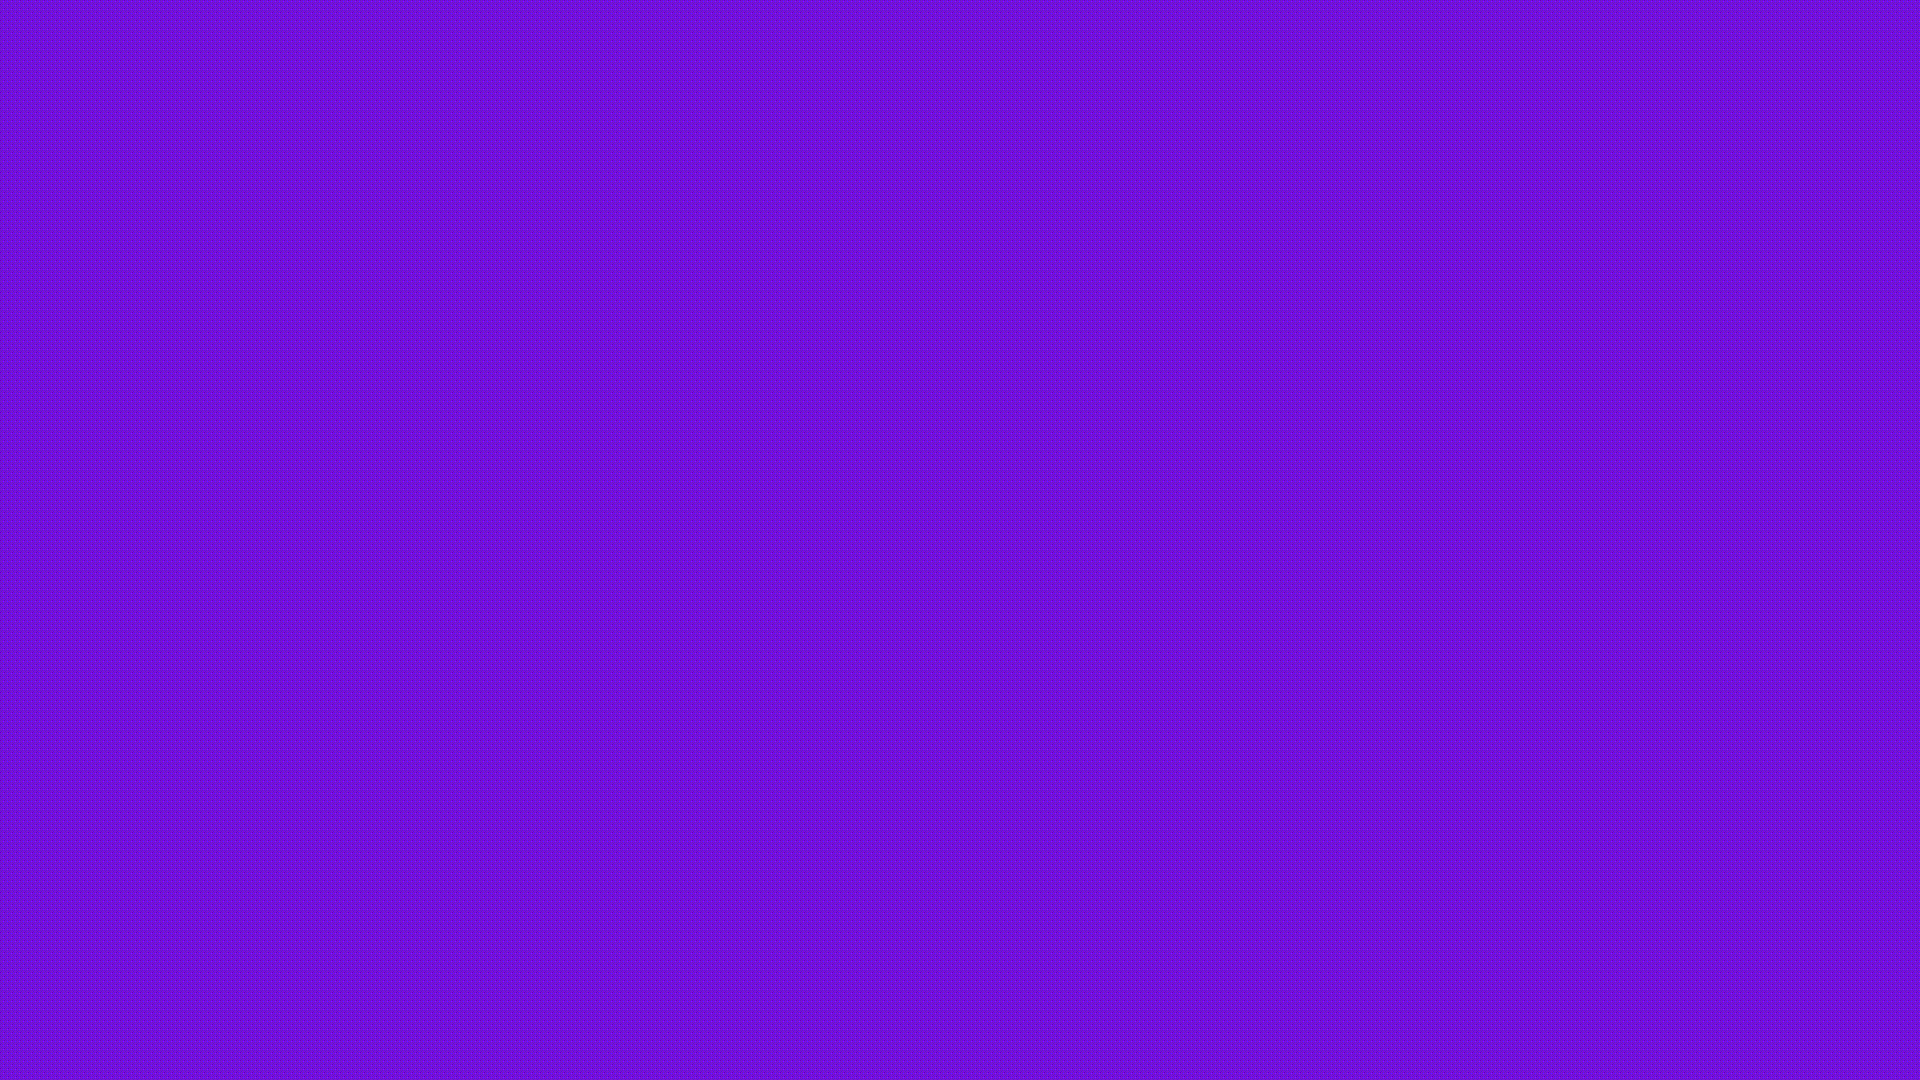 animated-fleur-de-lis-screensaver-in-purple-pdf.gif